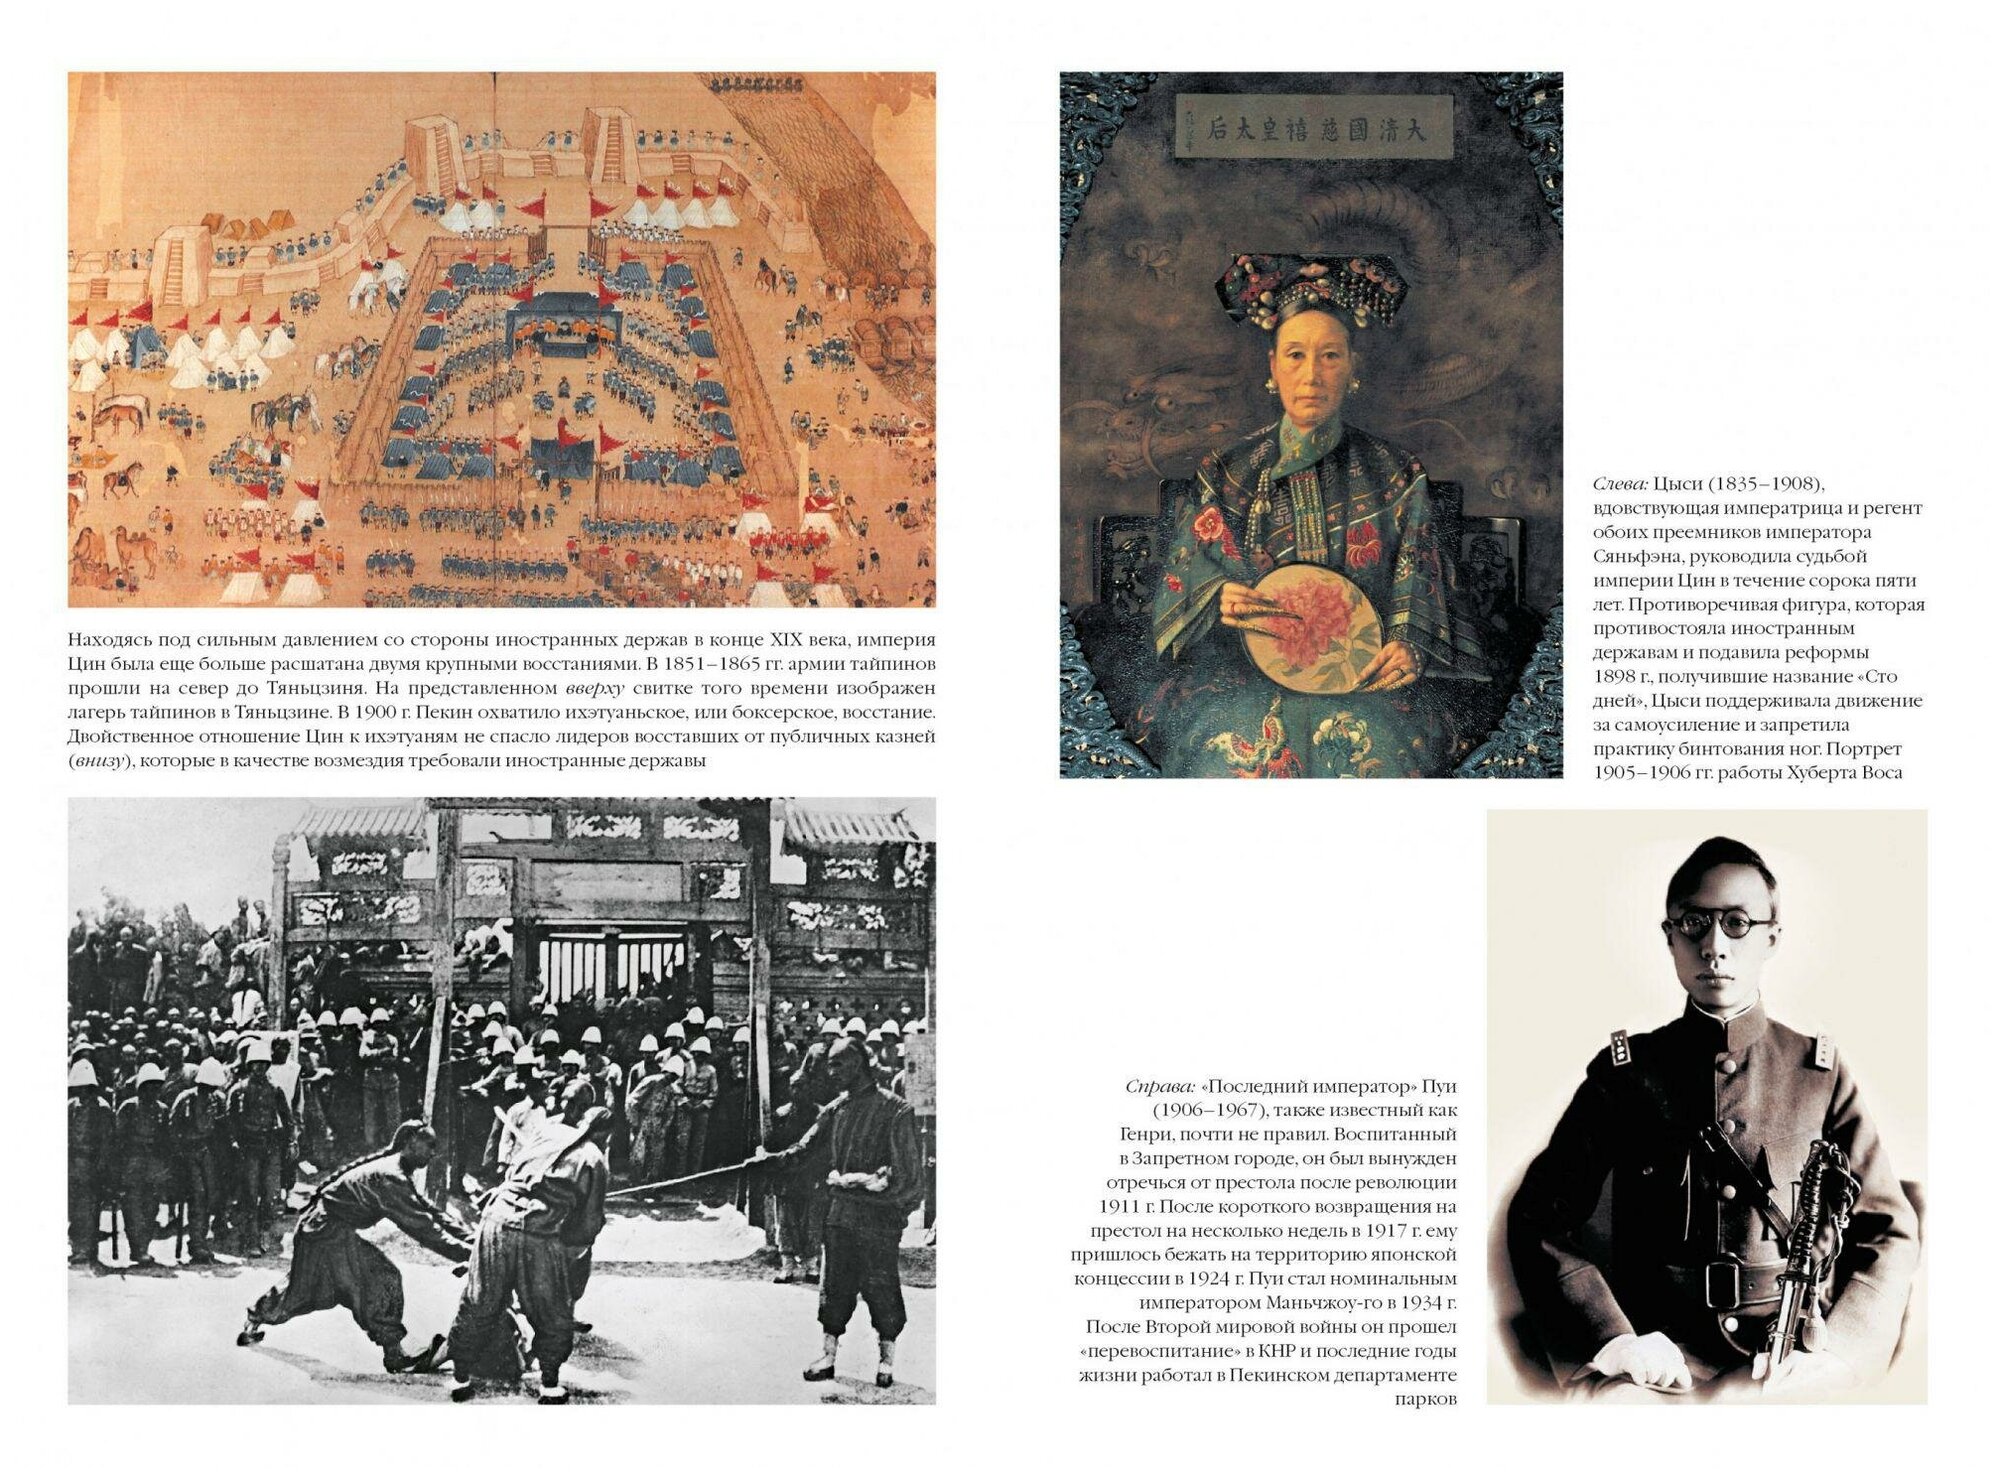 Кей Дж. Китай: От Конфуция до Мао Цзэдуна. Исторический интерес